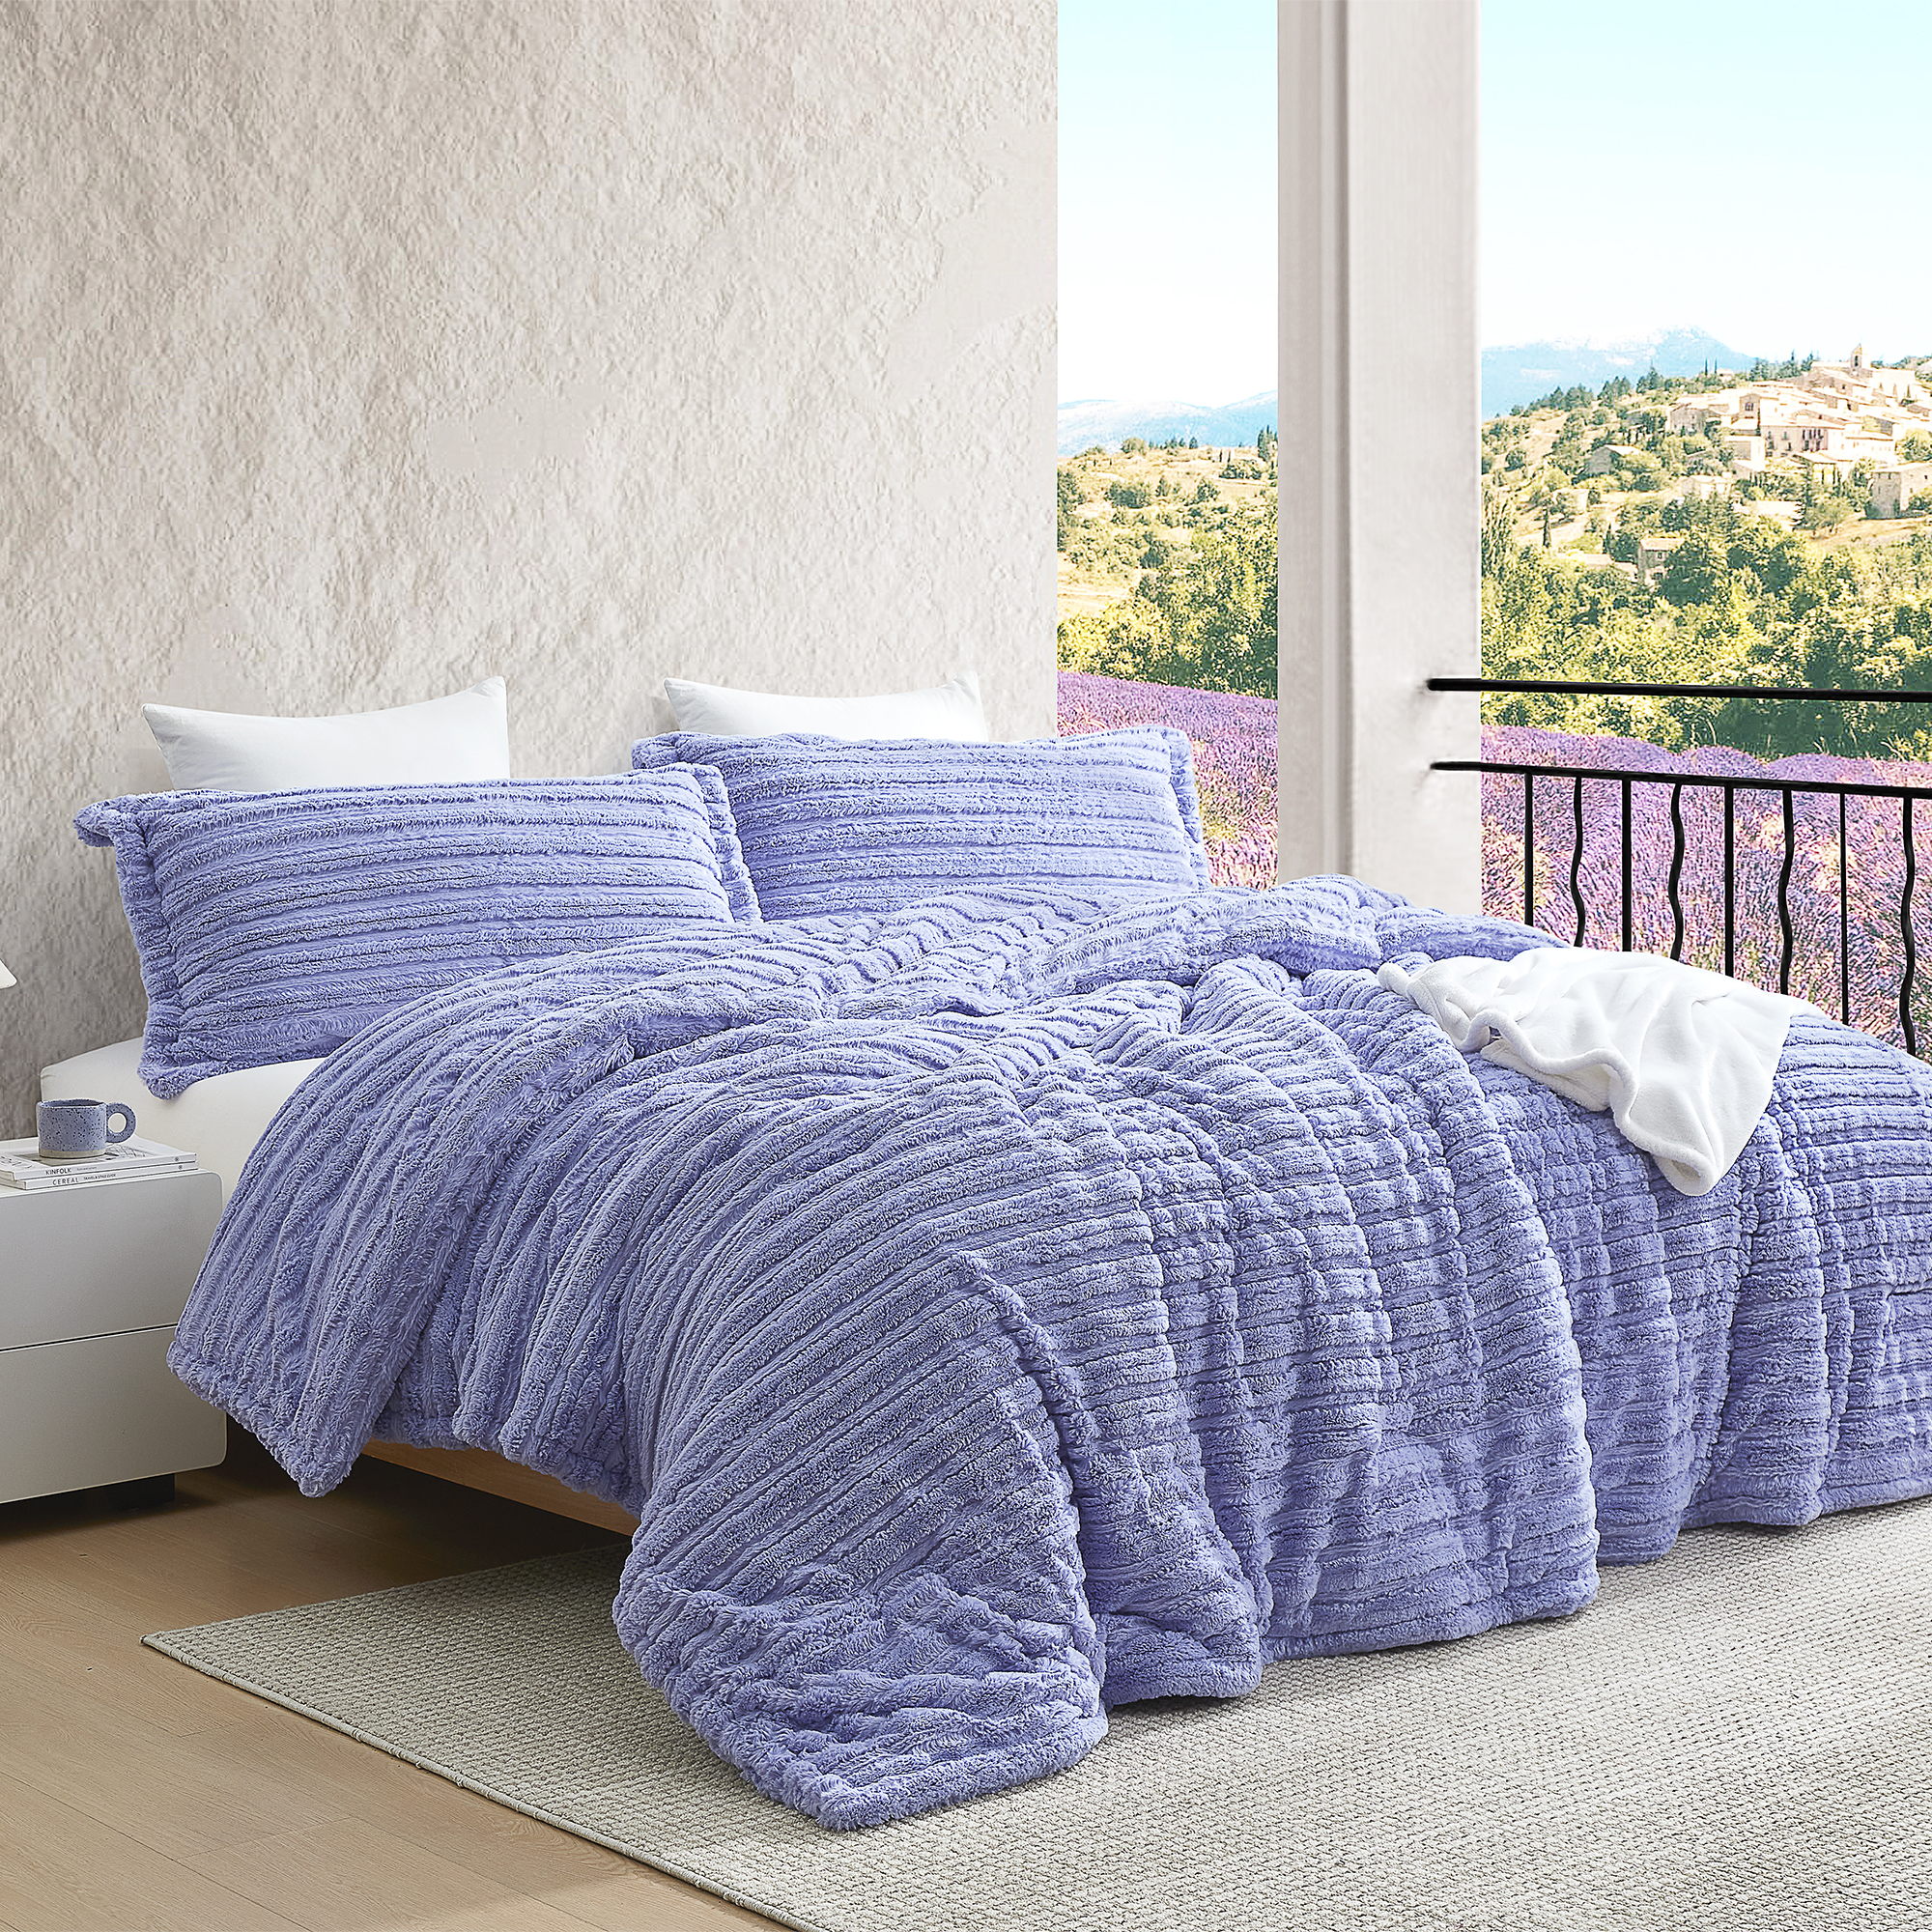 You're Makin Me Plush - Coma Inducer® Oversized King Comforter - Provence Purple